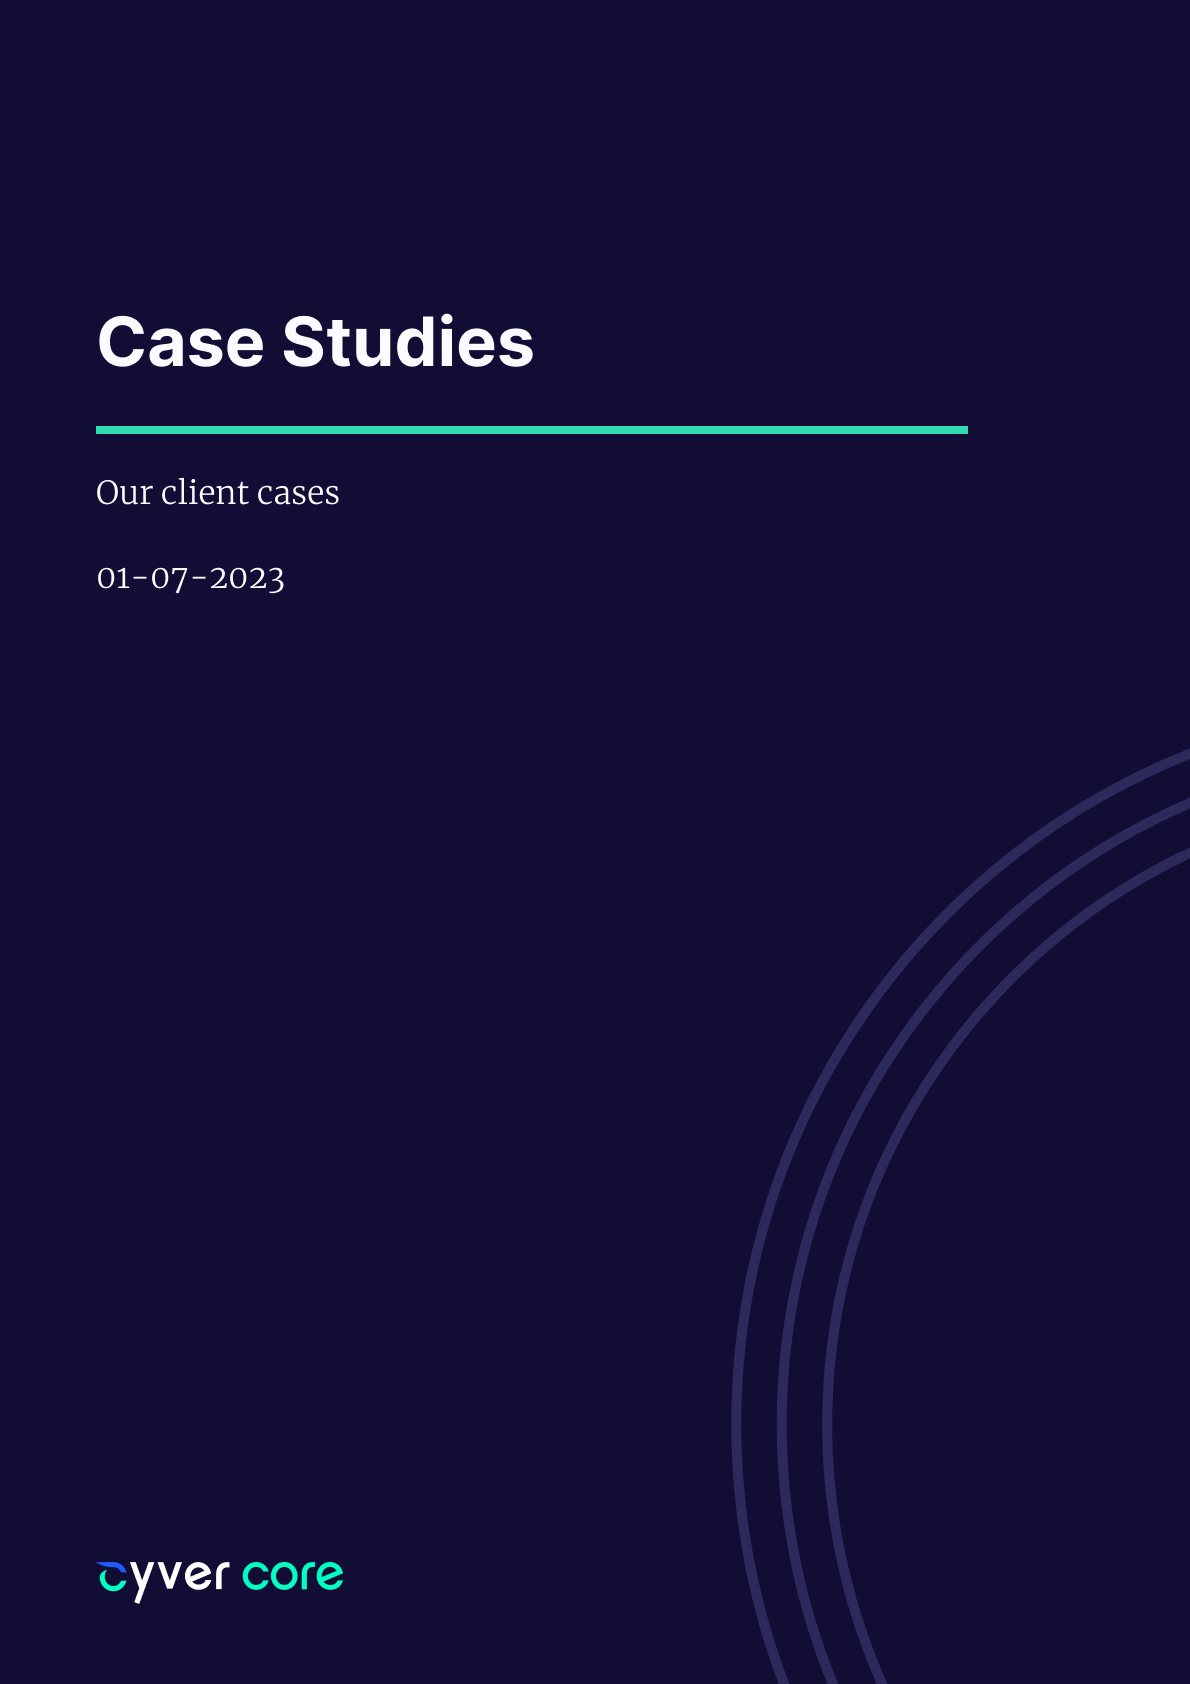 Download Cyver Core case studies 